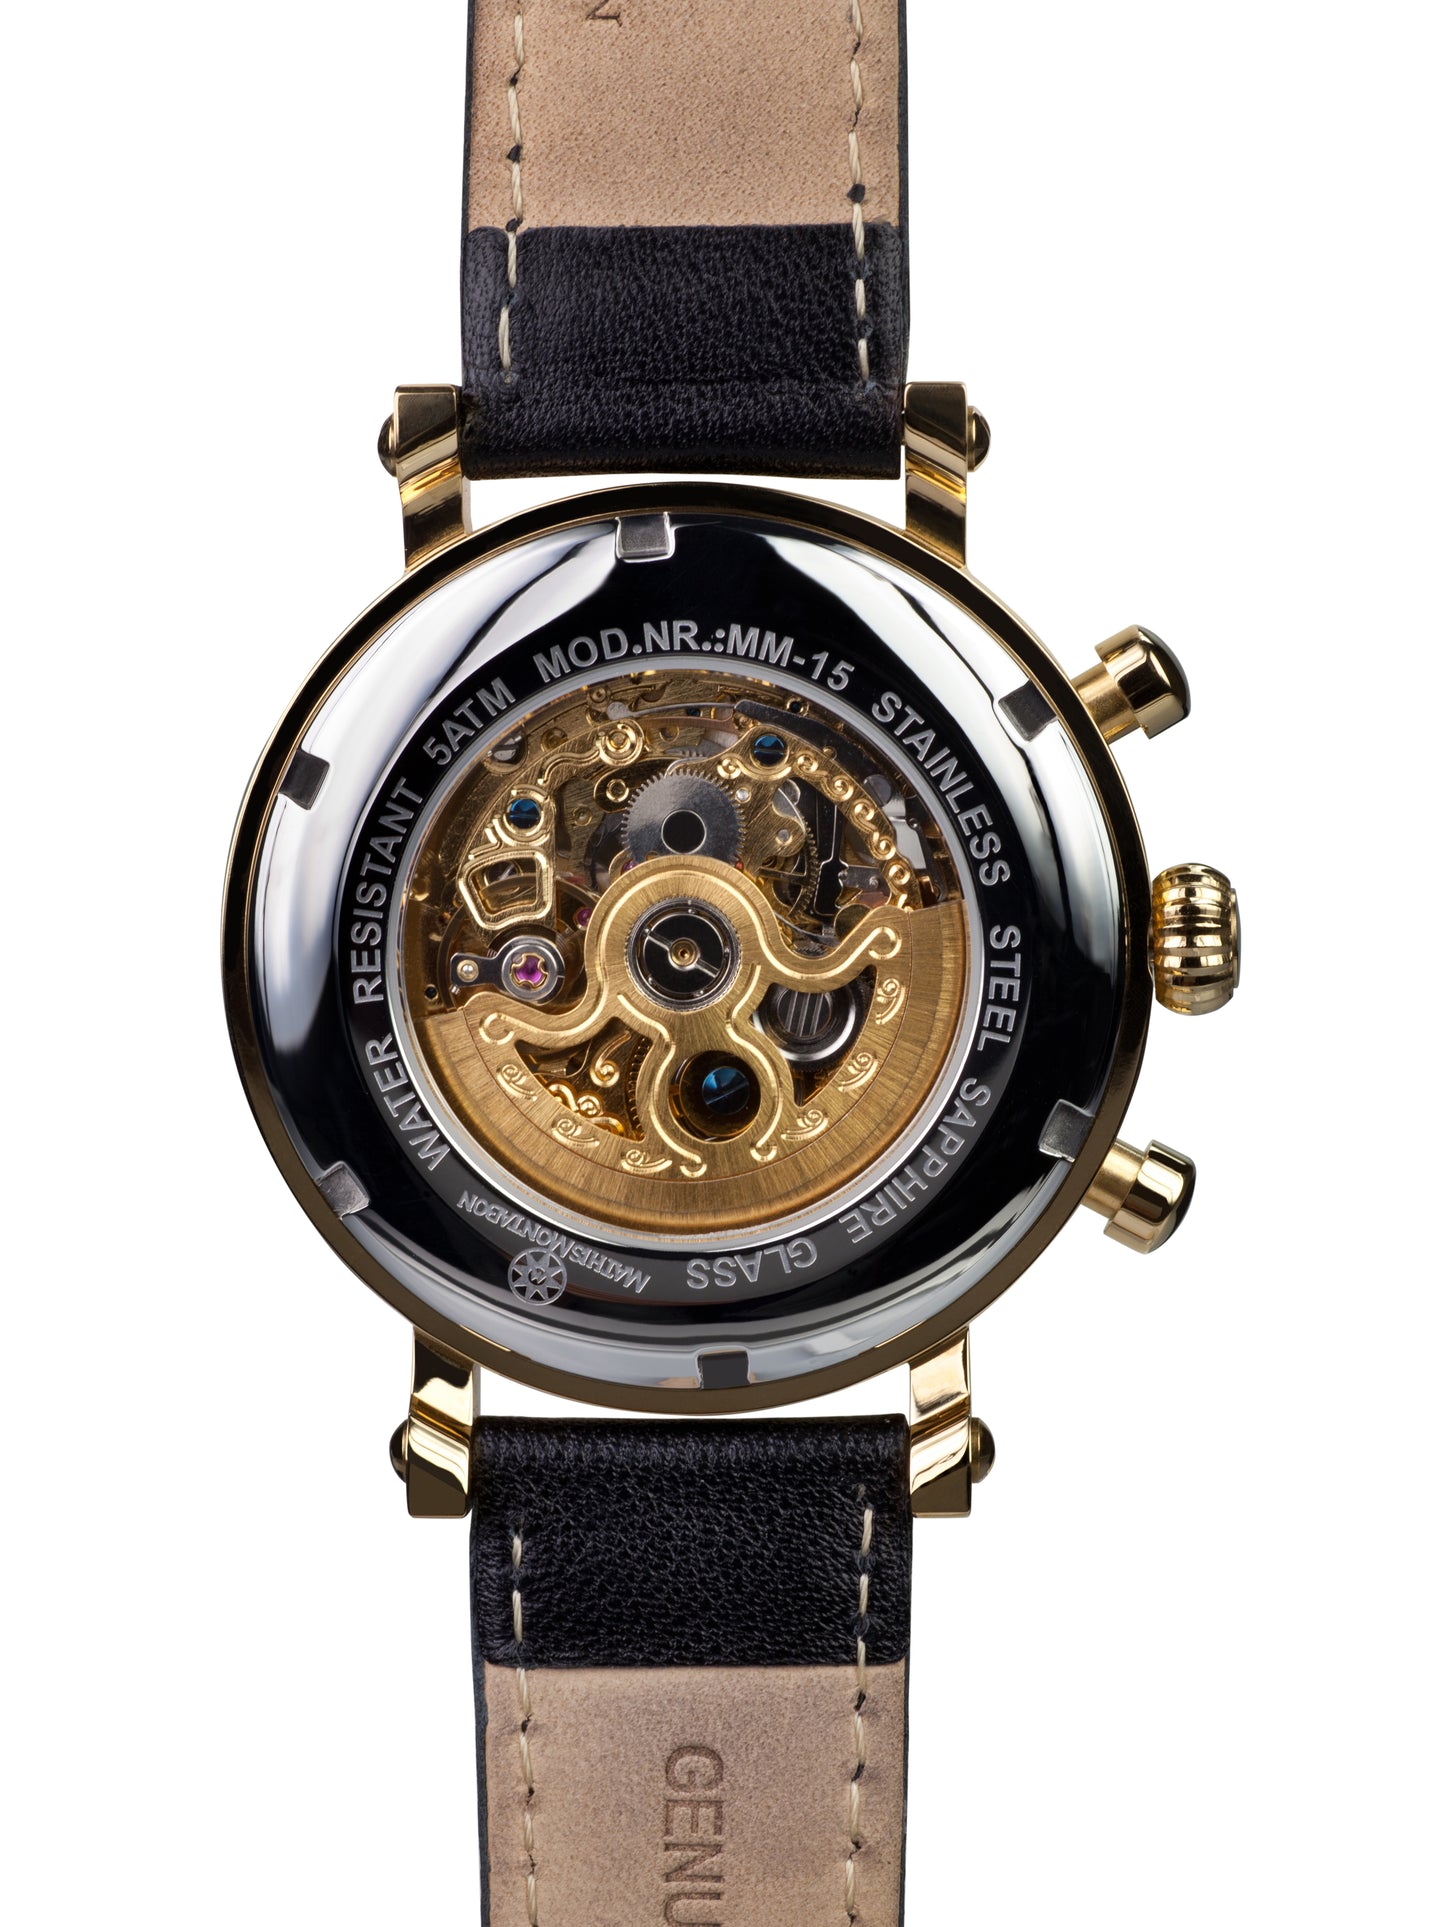 Automatic watches — Executive — Mathis Montabon — gold schwarz